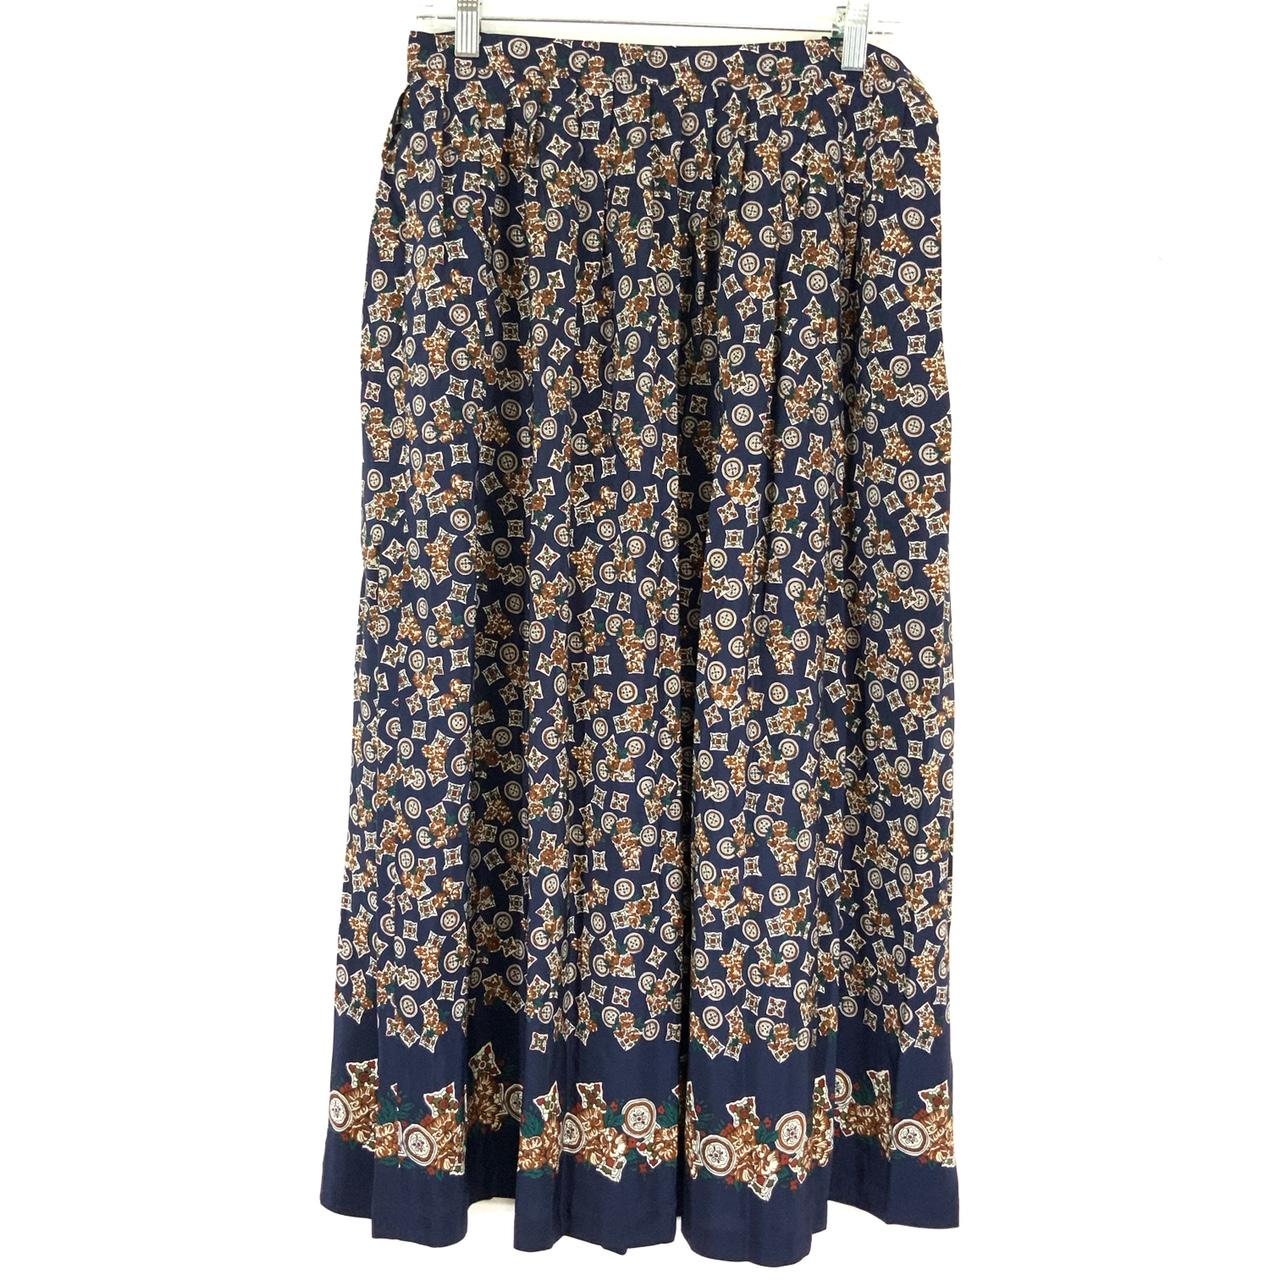 Product Image 1 - Beautiful 1990s 100% silk skirt